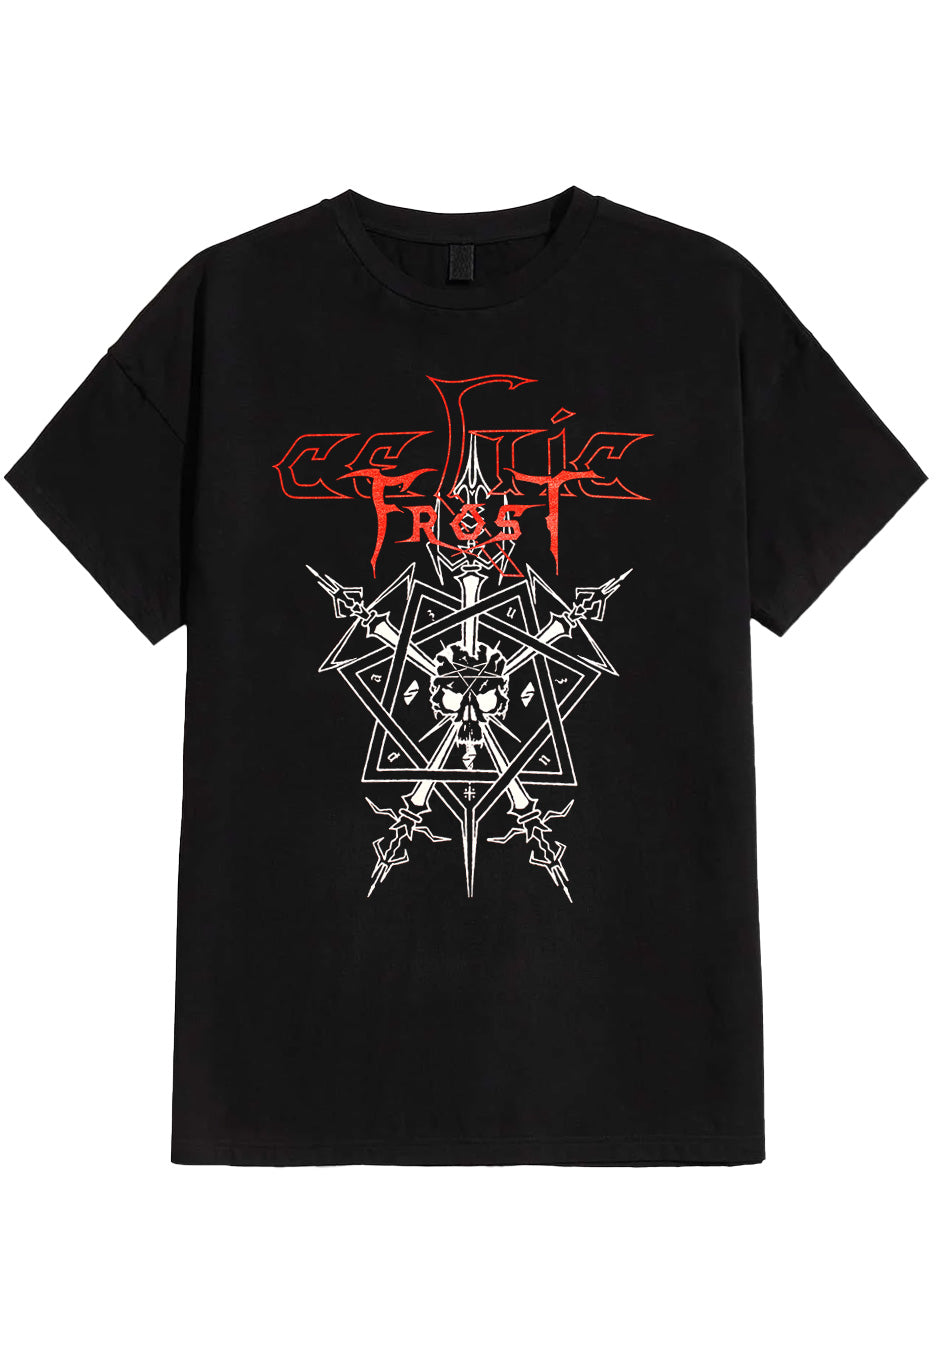 Celtic Frost - Morbid Tales - T-Shirt